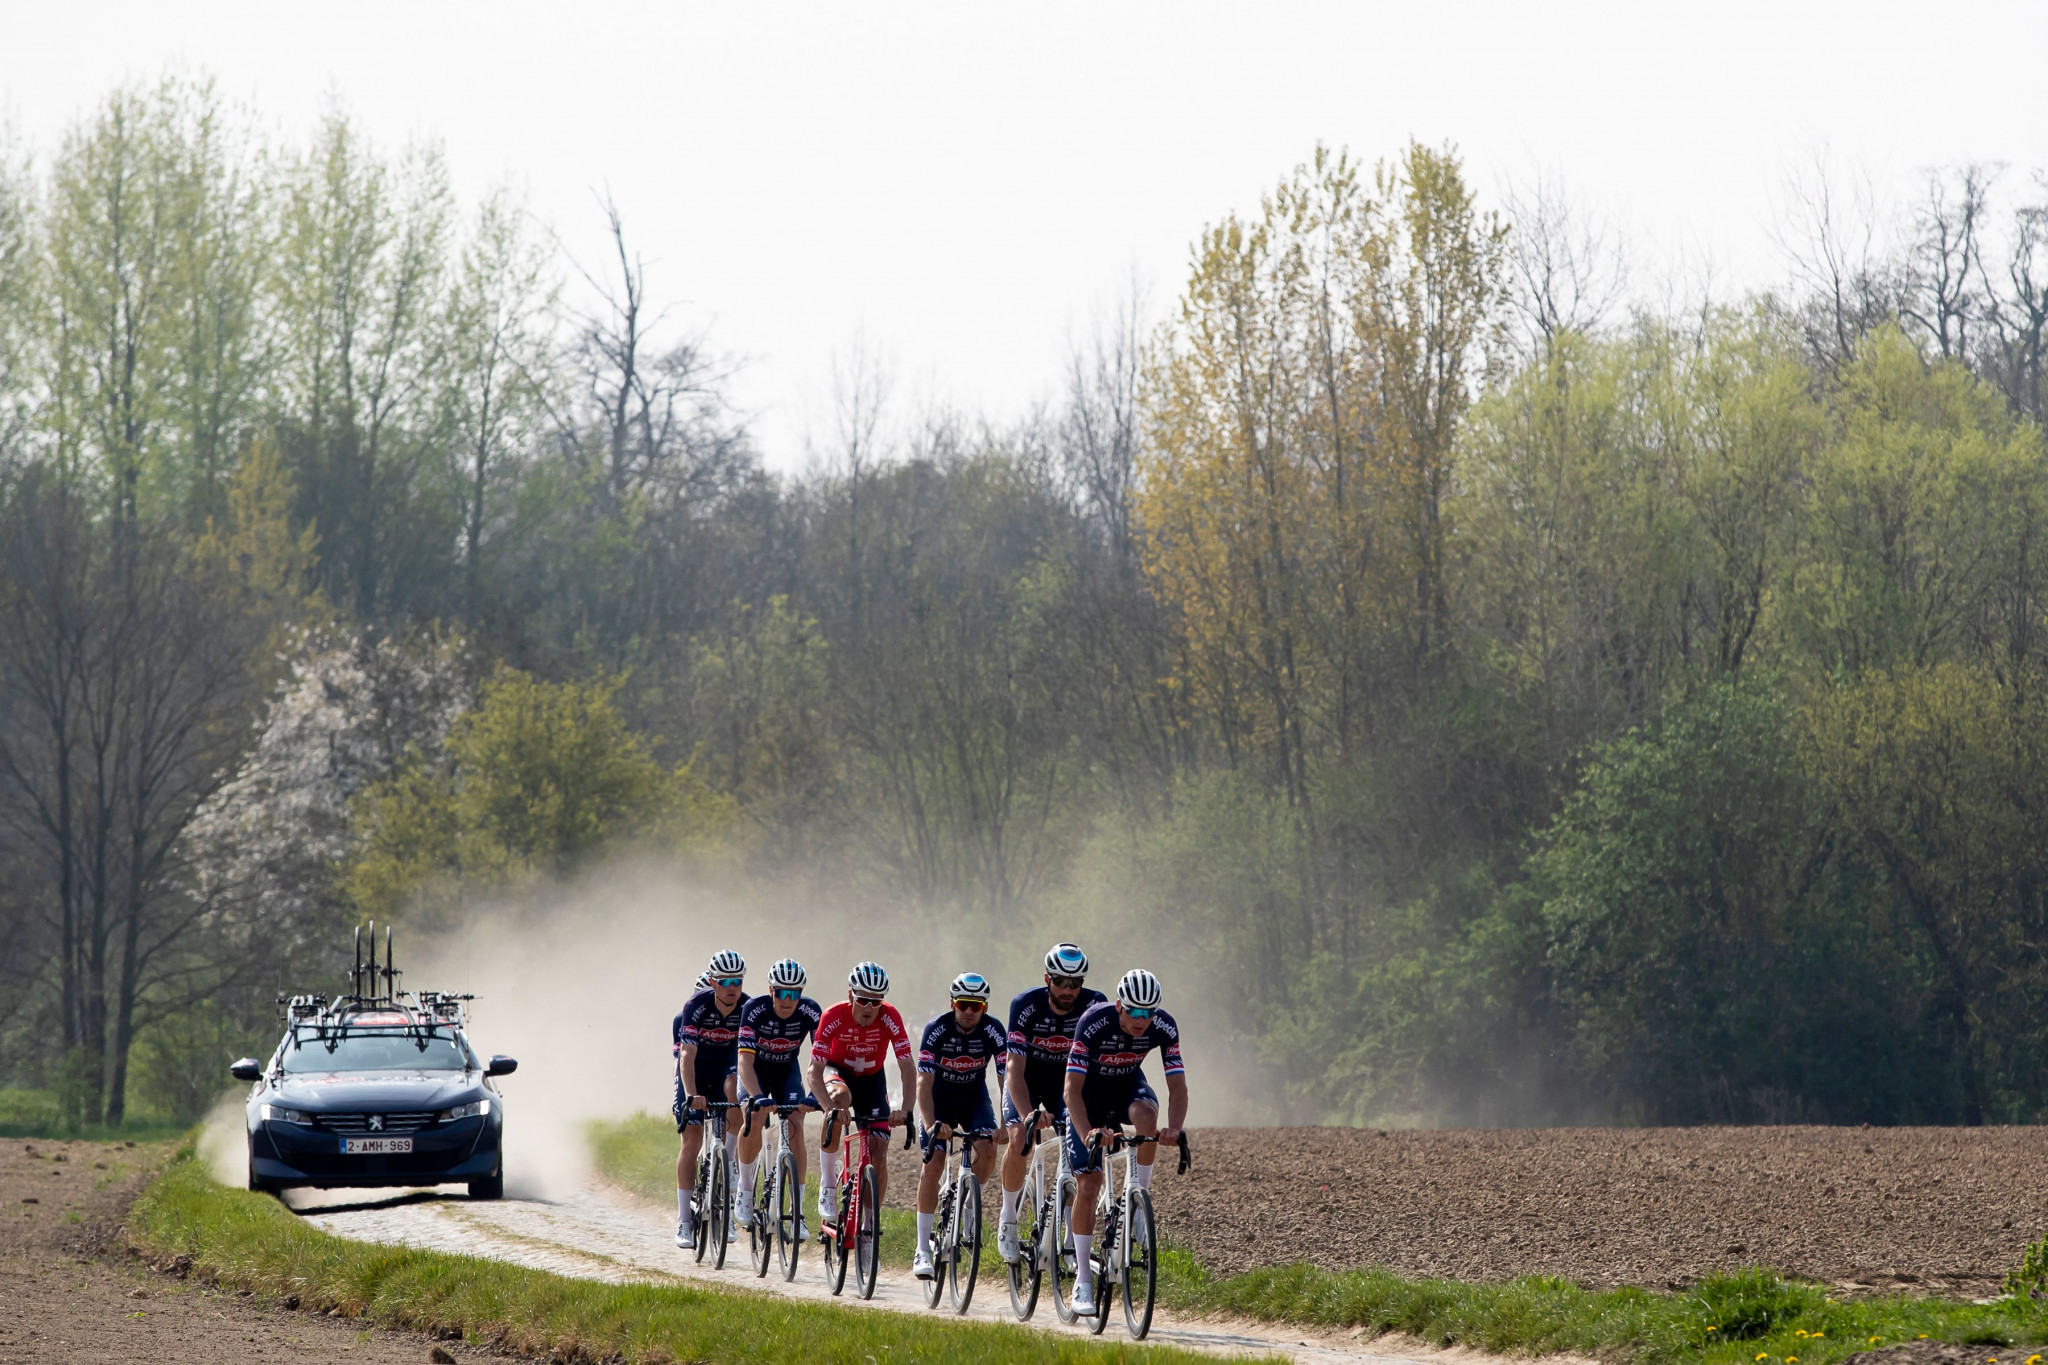 Paris-Roubaix to make return to traditional time slot